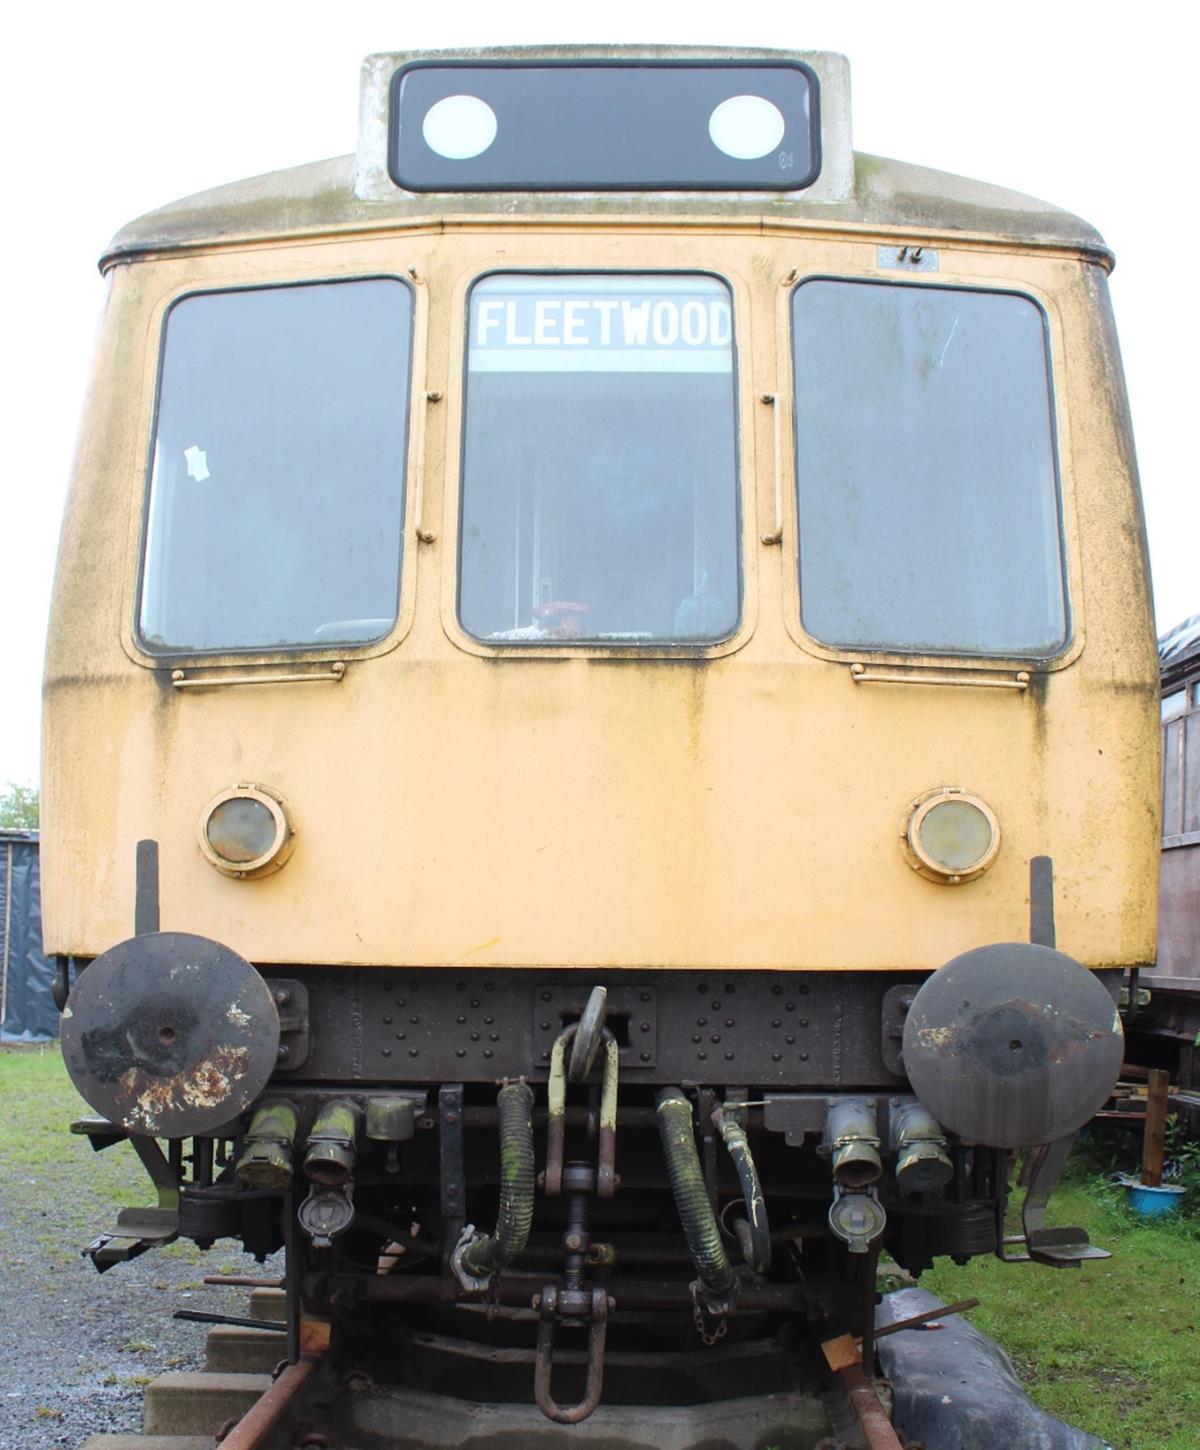 M51937 now has a restored destination box showing "Fleetwood".